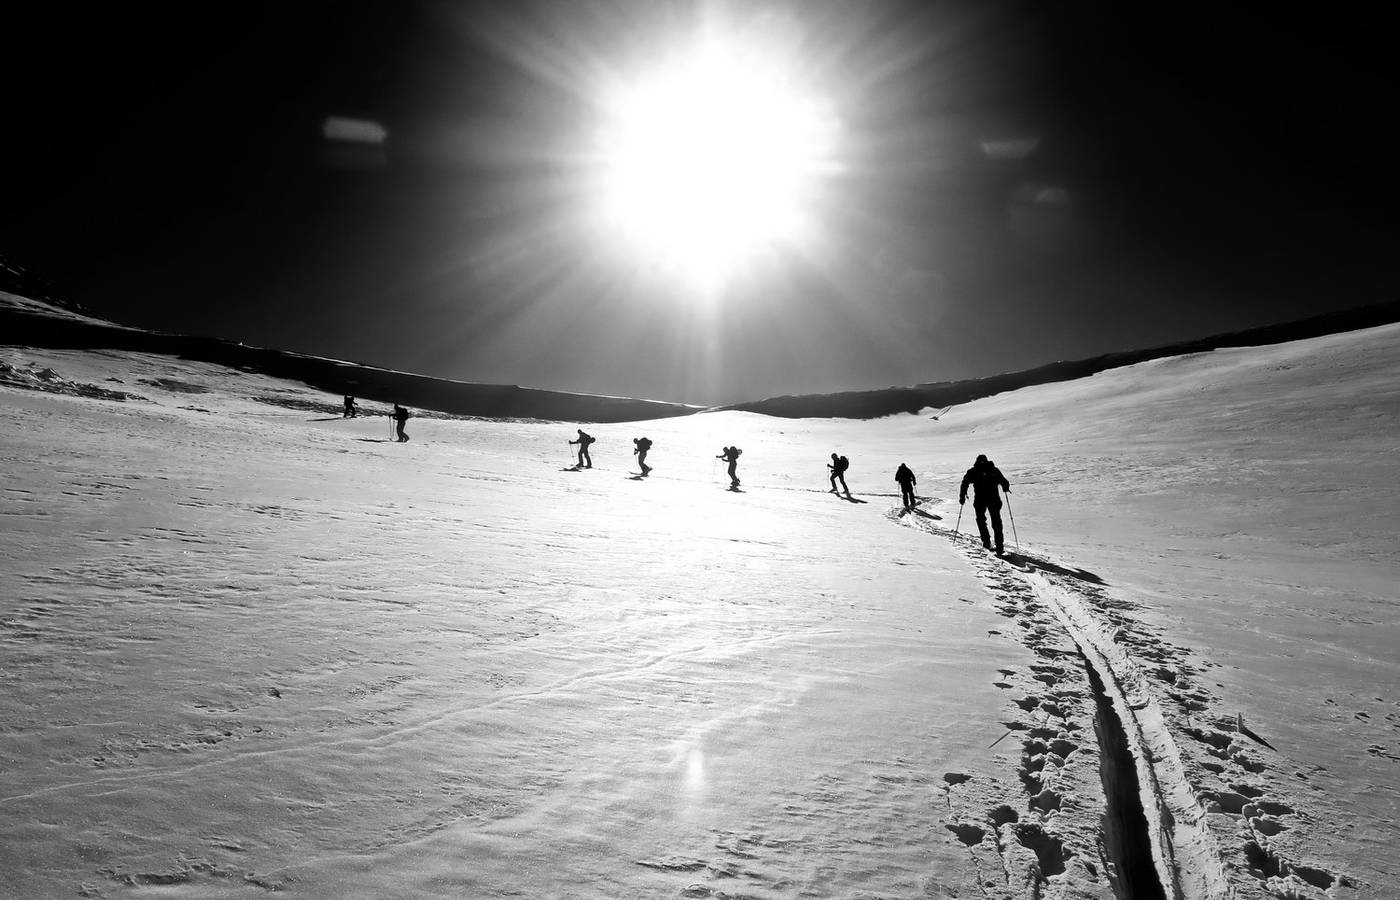 Ski mountaineering trip to Kyrgystan